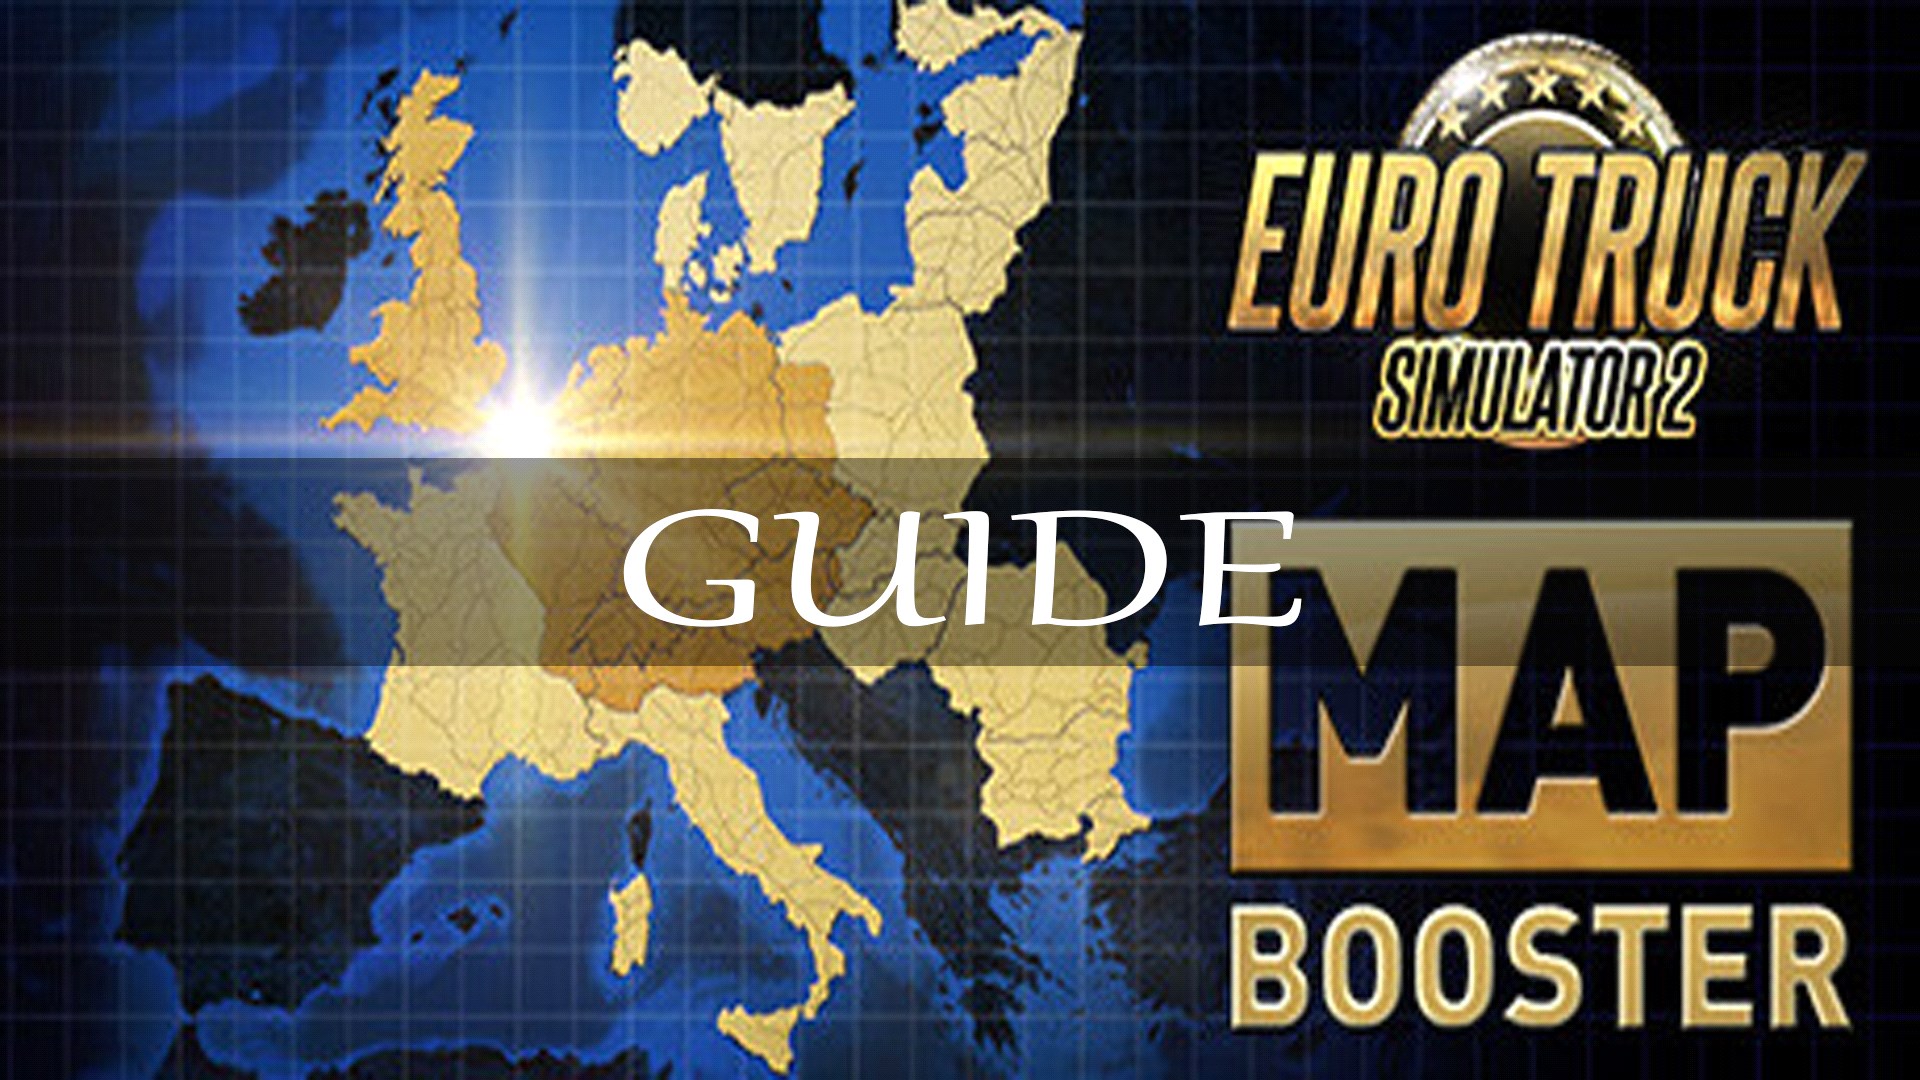  Euro  Truck  Simulator  2 Map  Booster Walkthrough Game Guide 